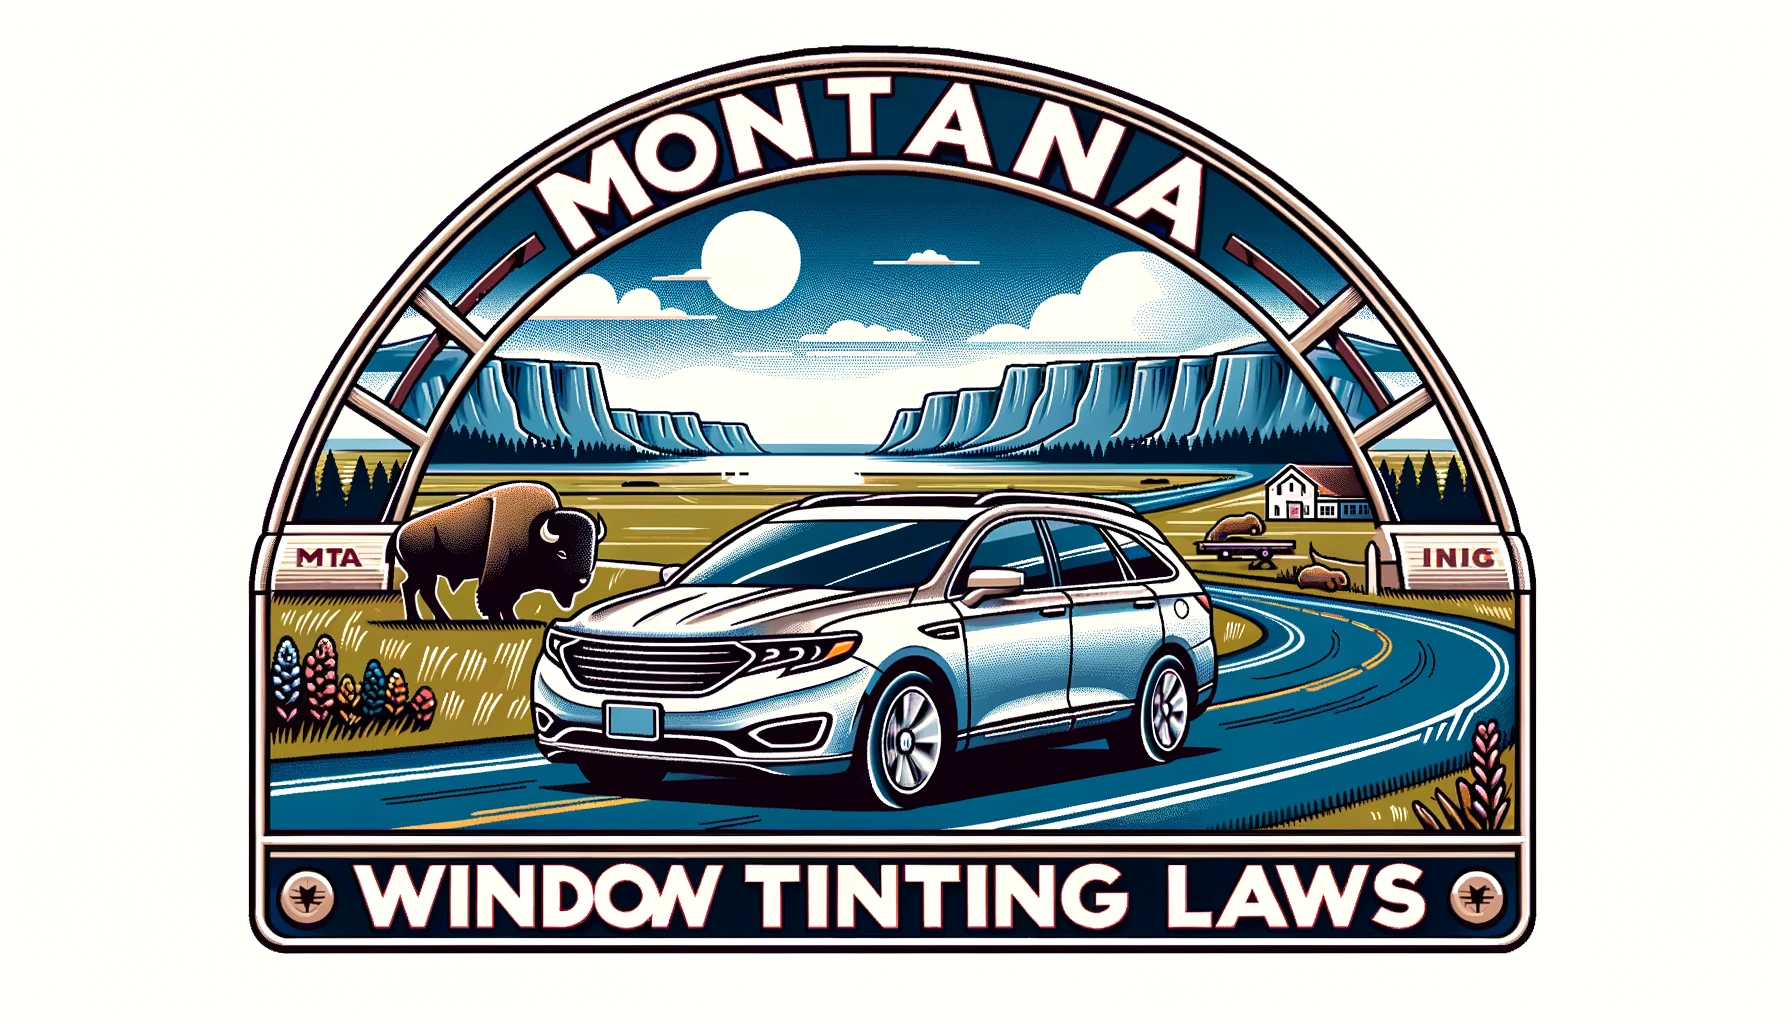 Montana Window Tinting Laws